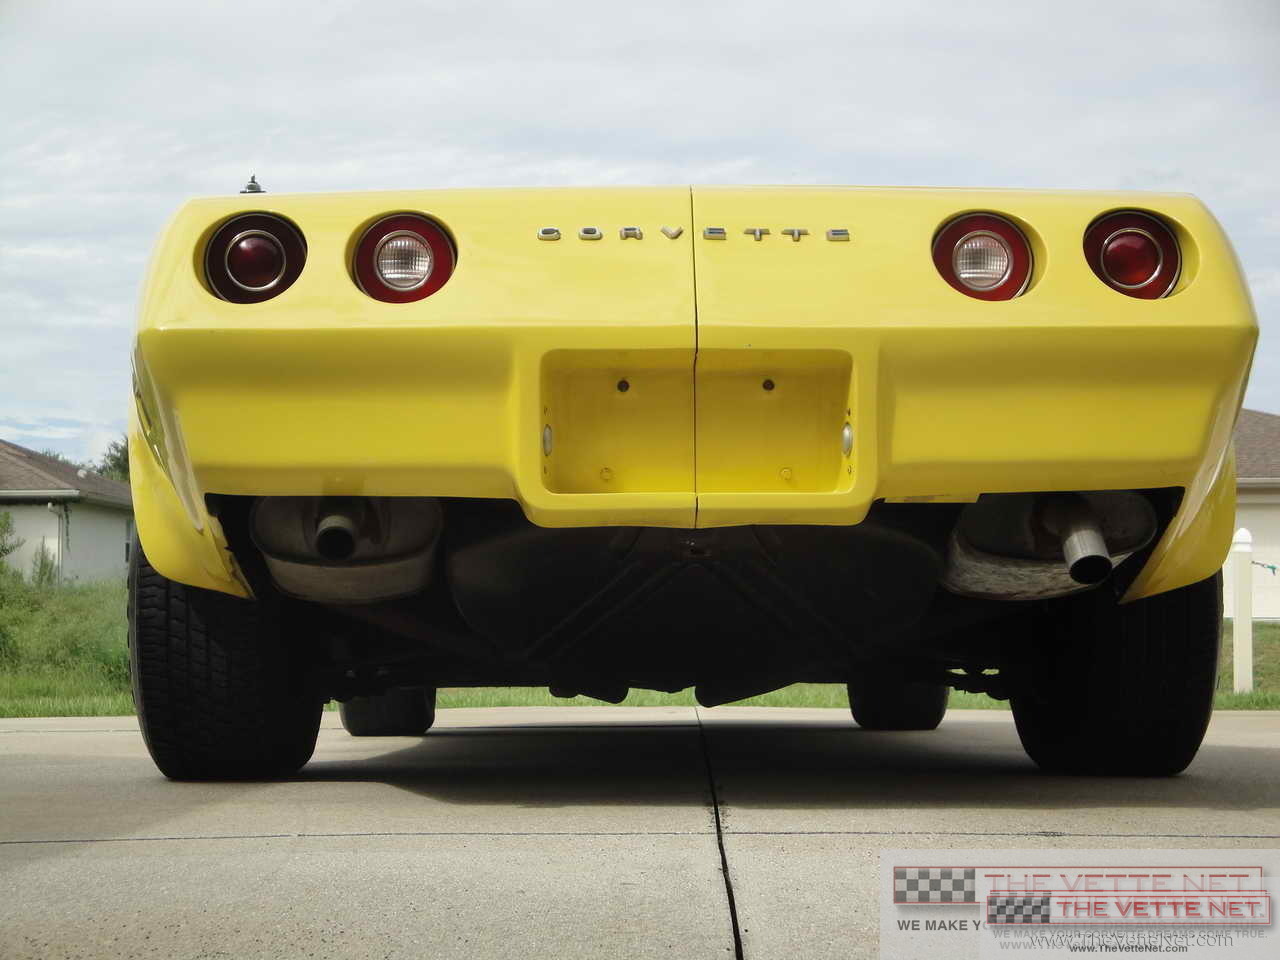 1974 Corvette Convertible Bright Yellow